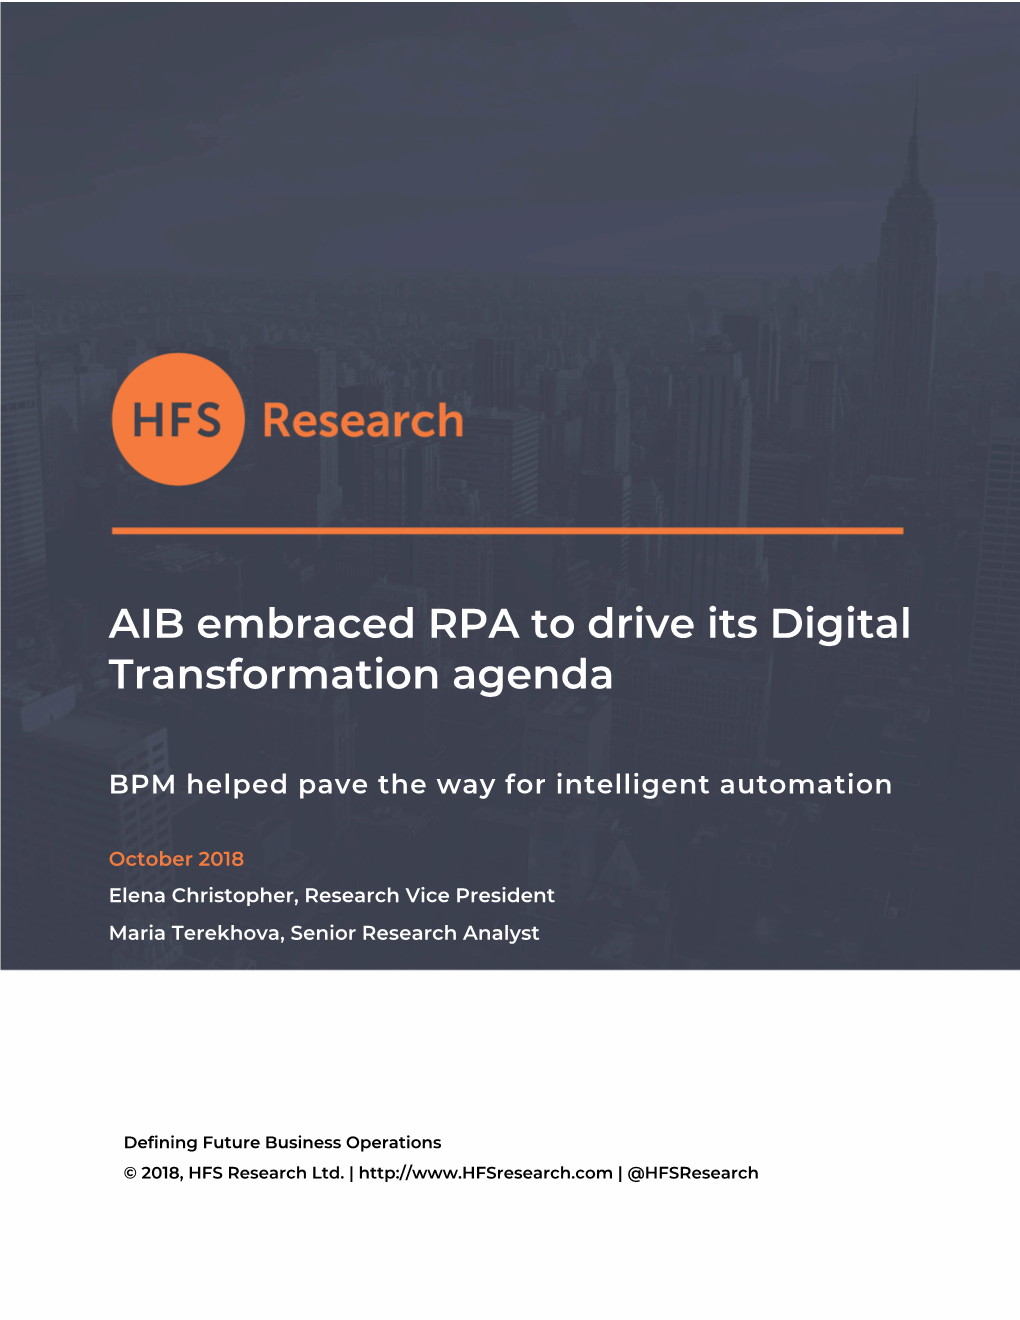 AIB Embraced RPA to Drive Its Digital Transformation Agenda